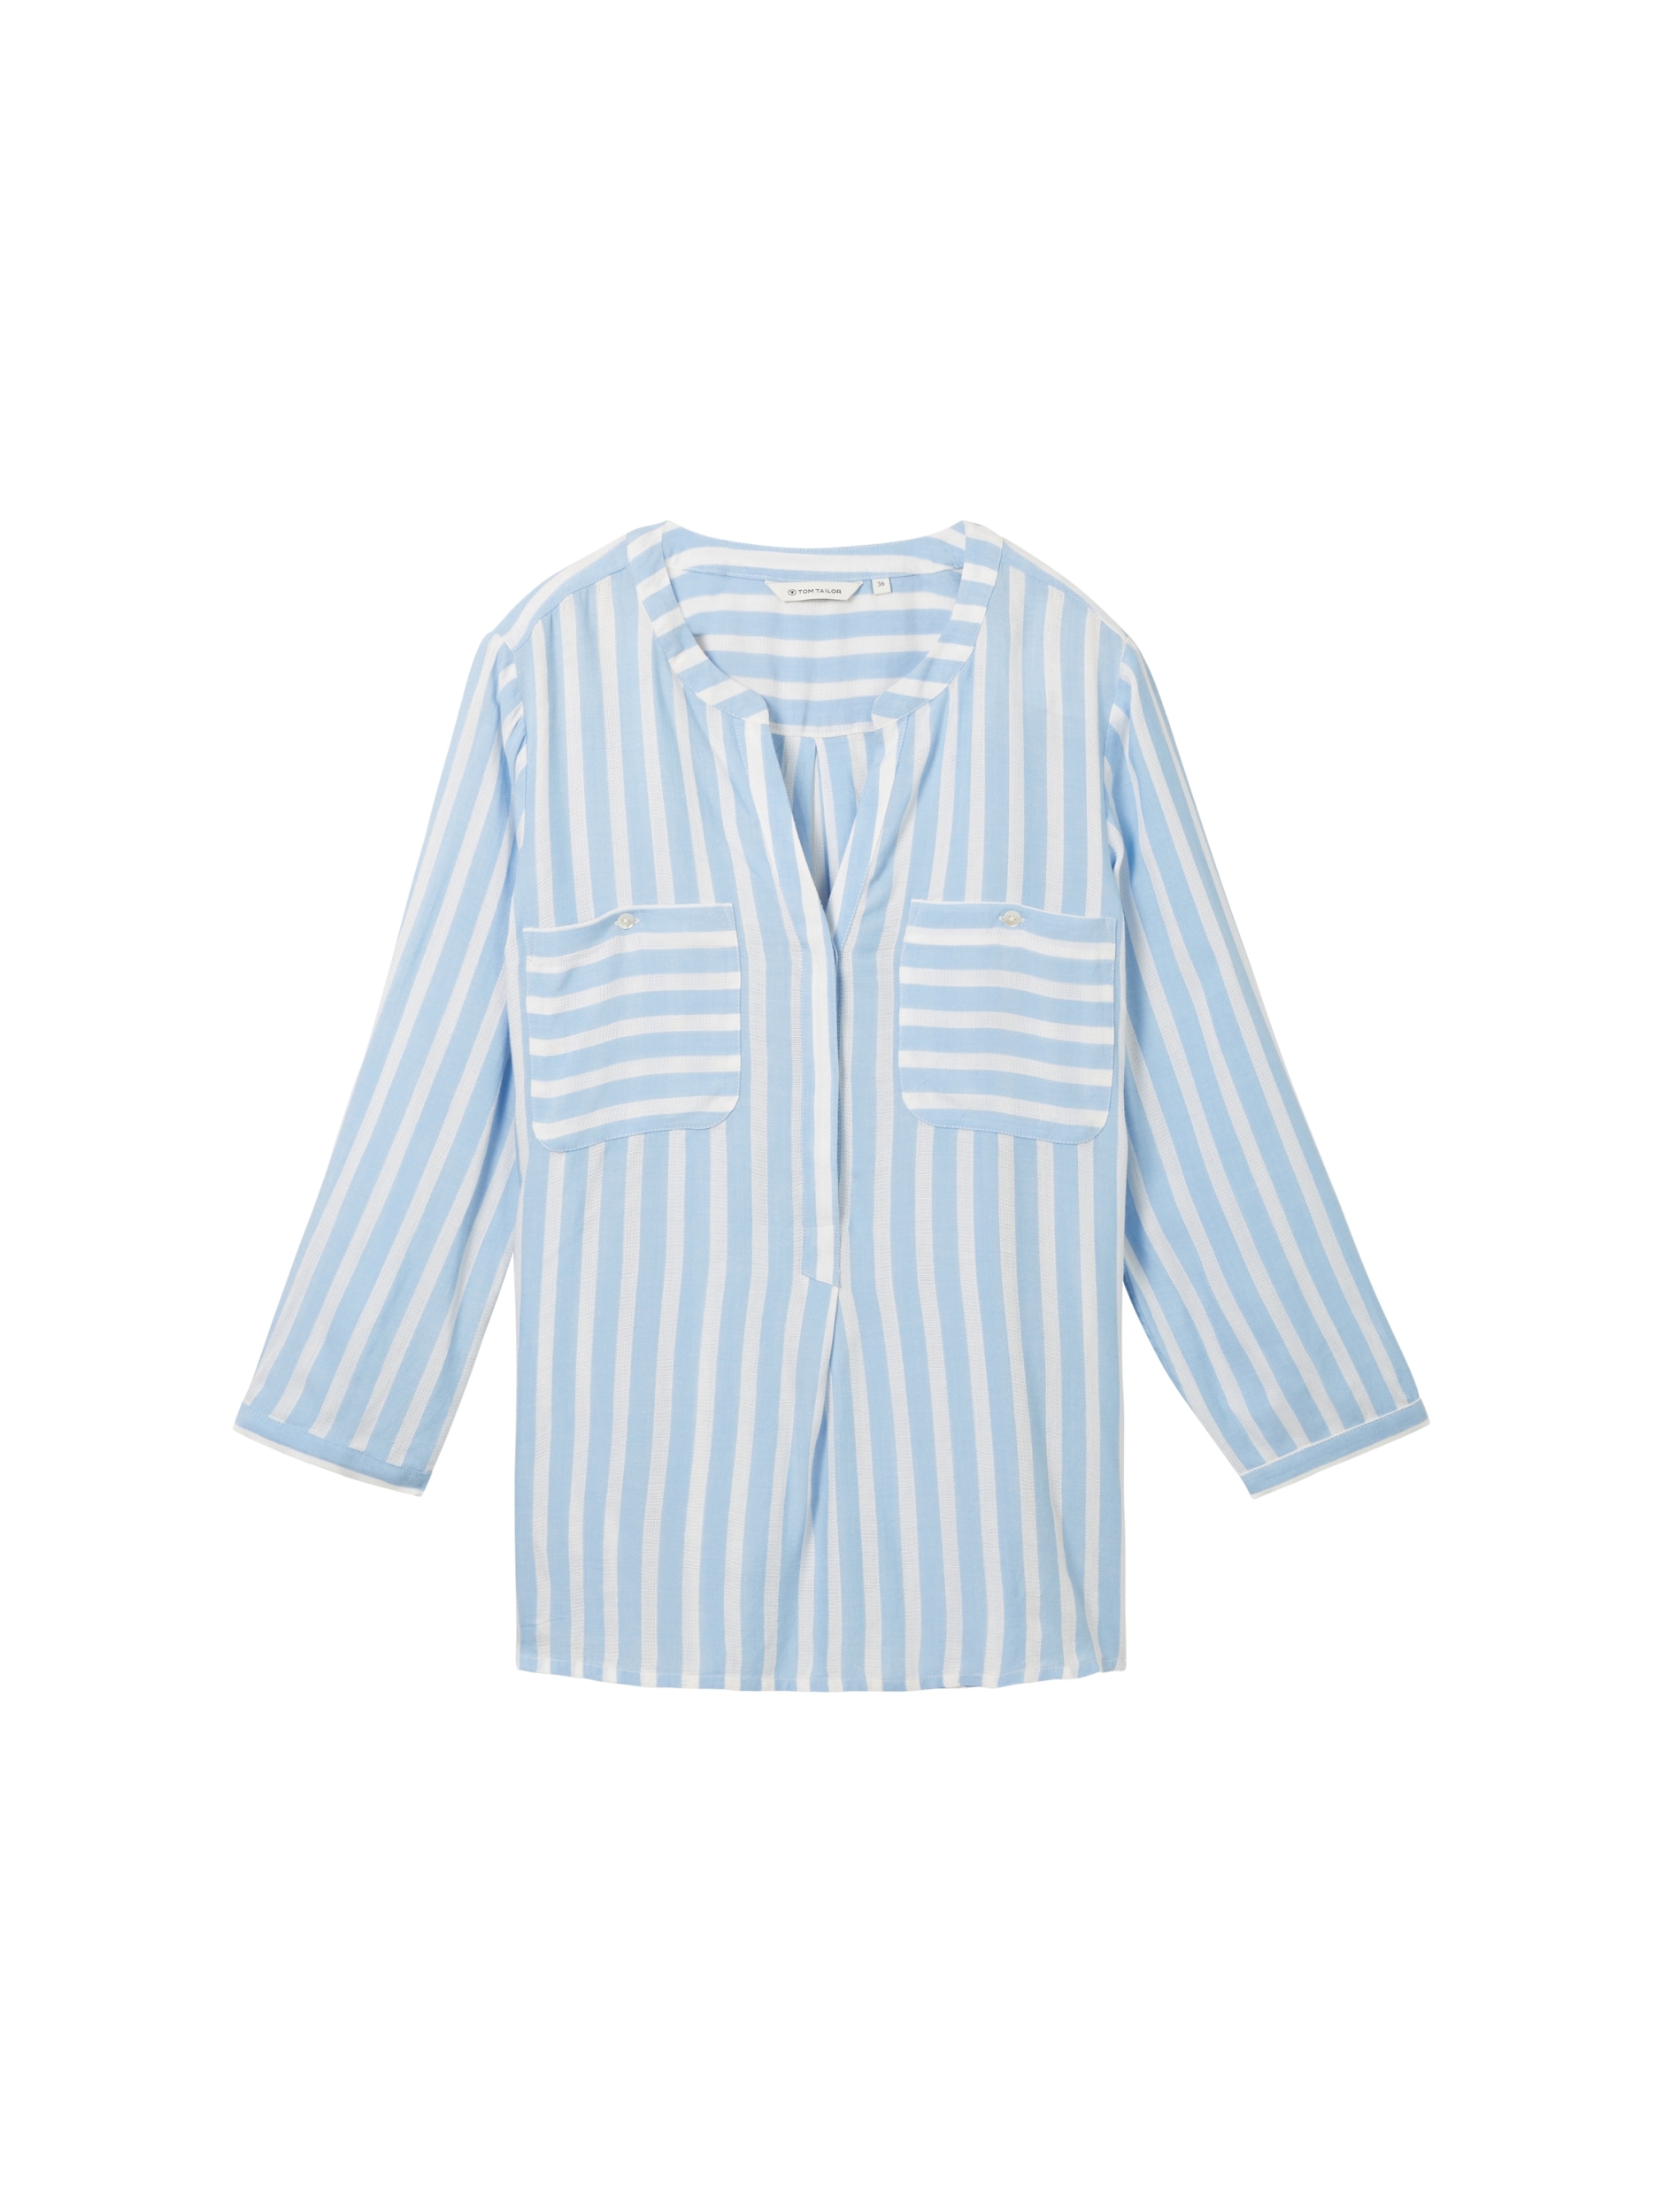 kaufen online TAILOR TOM striped blouse